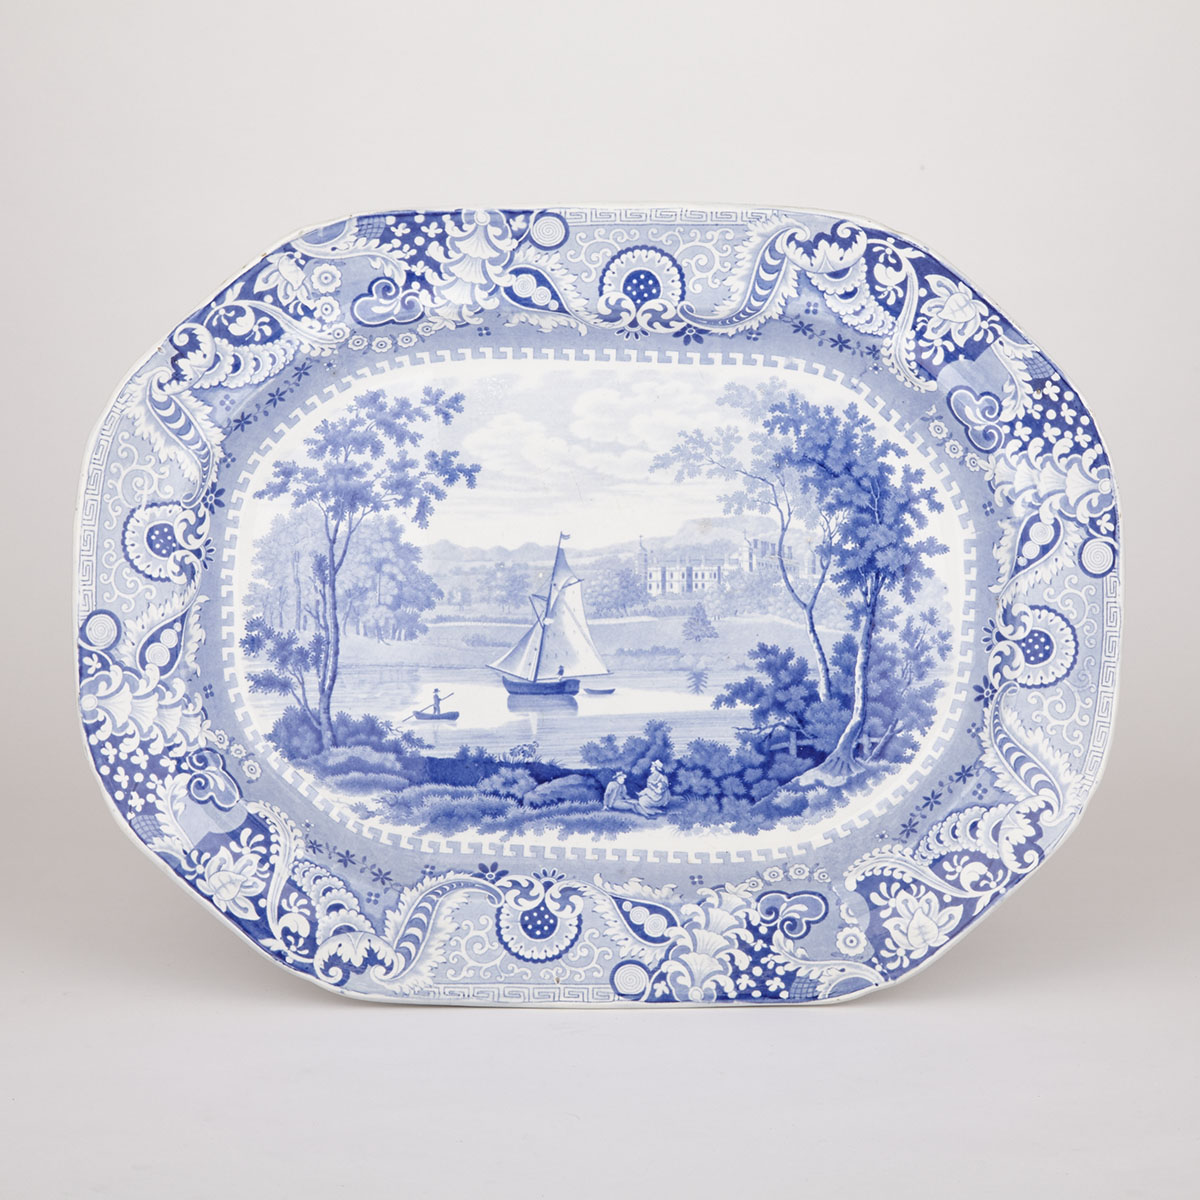 Elkin, Knight & Co. Blue-Printed ‘Irish Scenery’ Oval Platter, c.1825